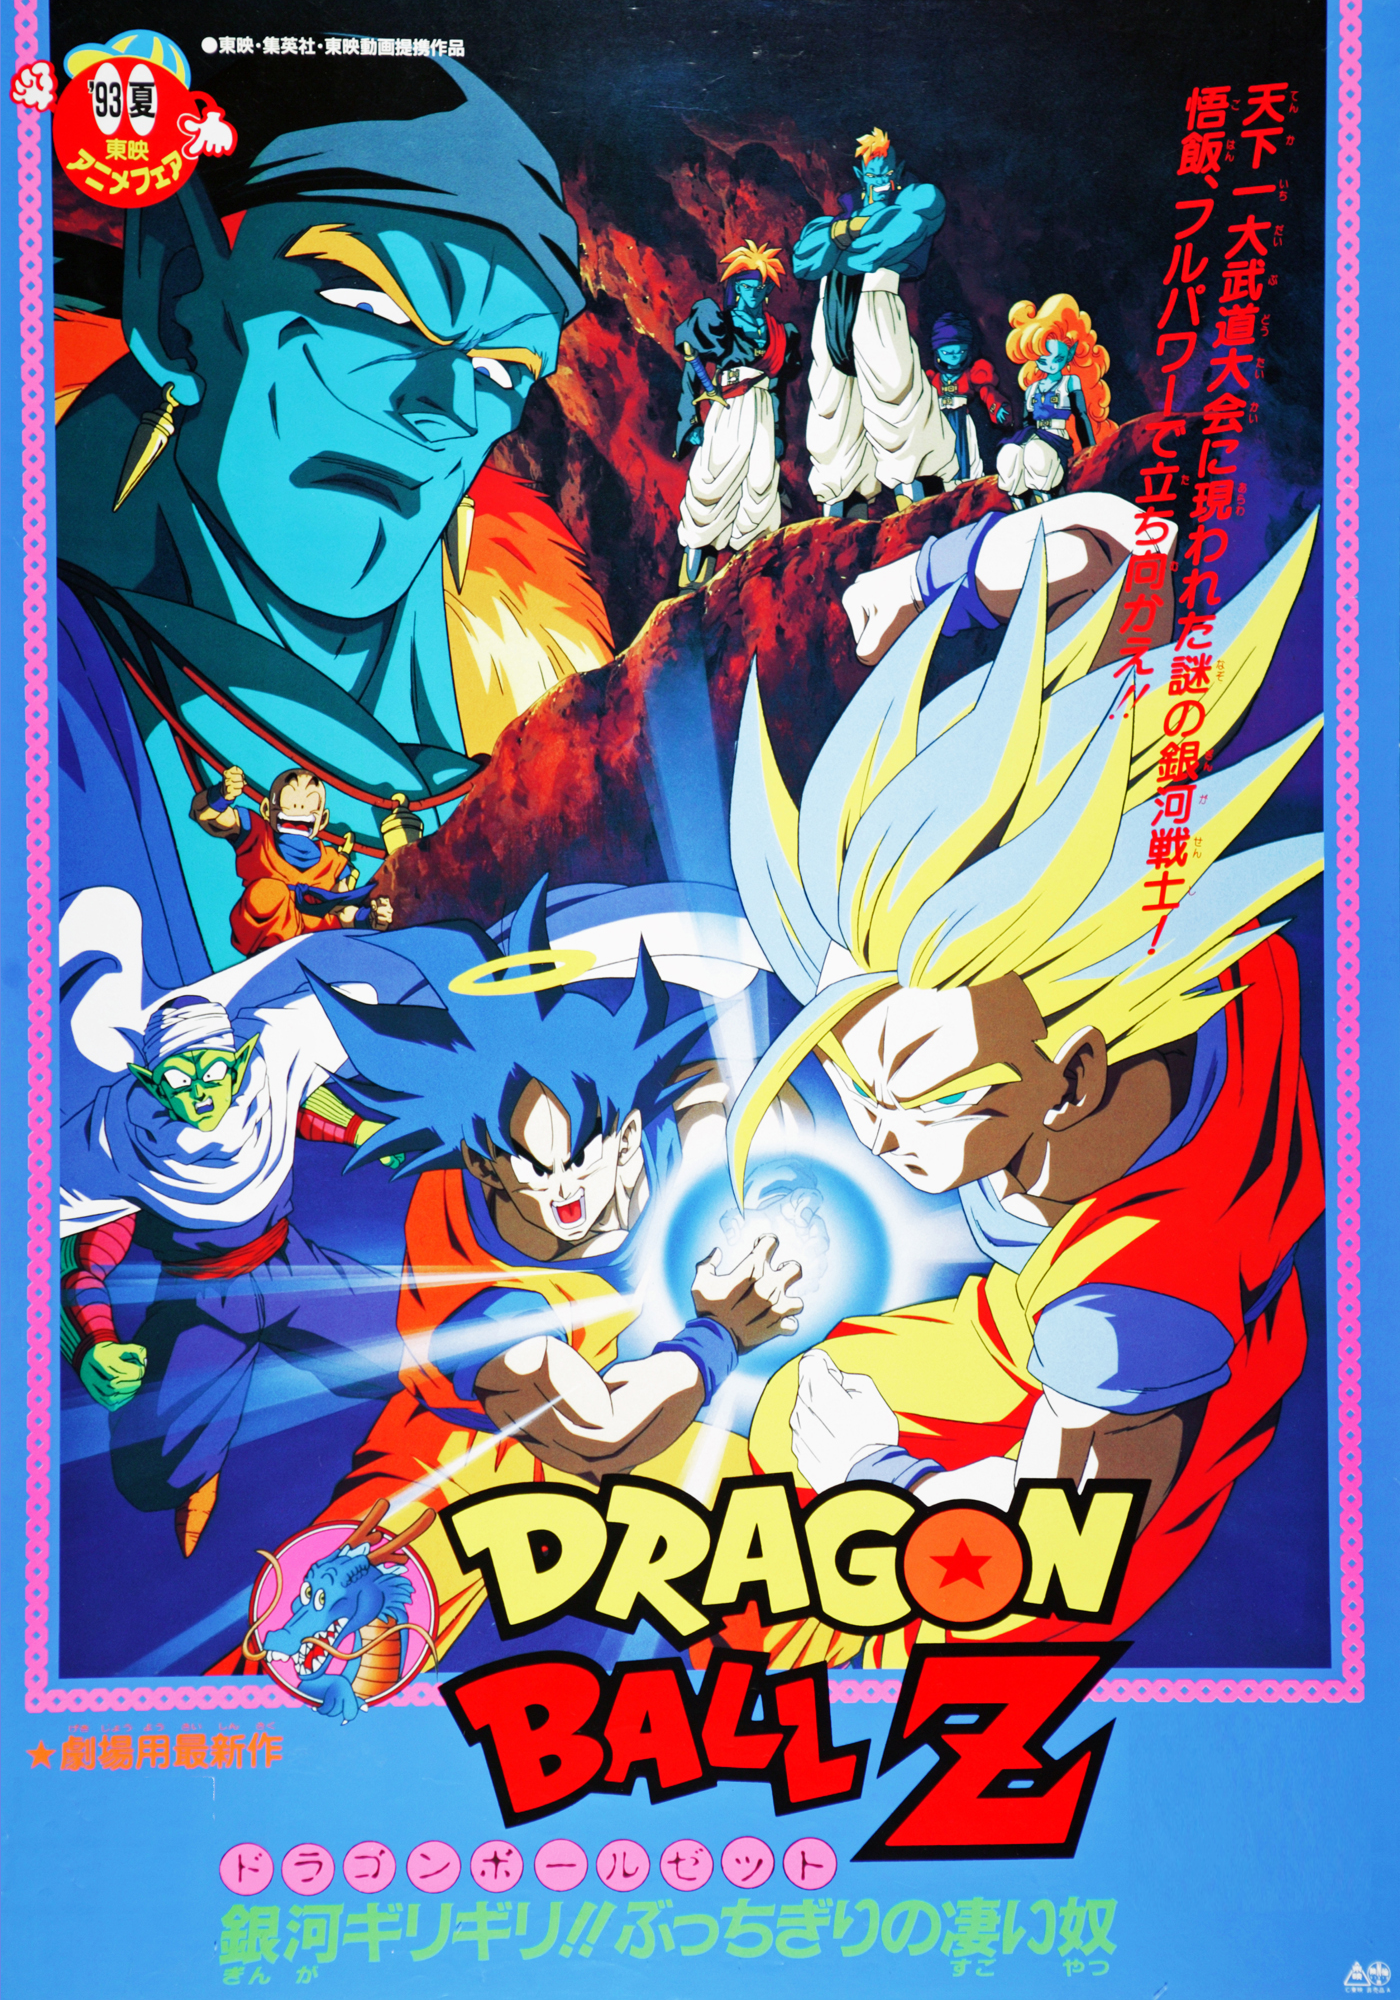 Dragon Ball Super Card Game, Dragon Universe Wiki